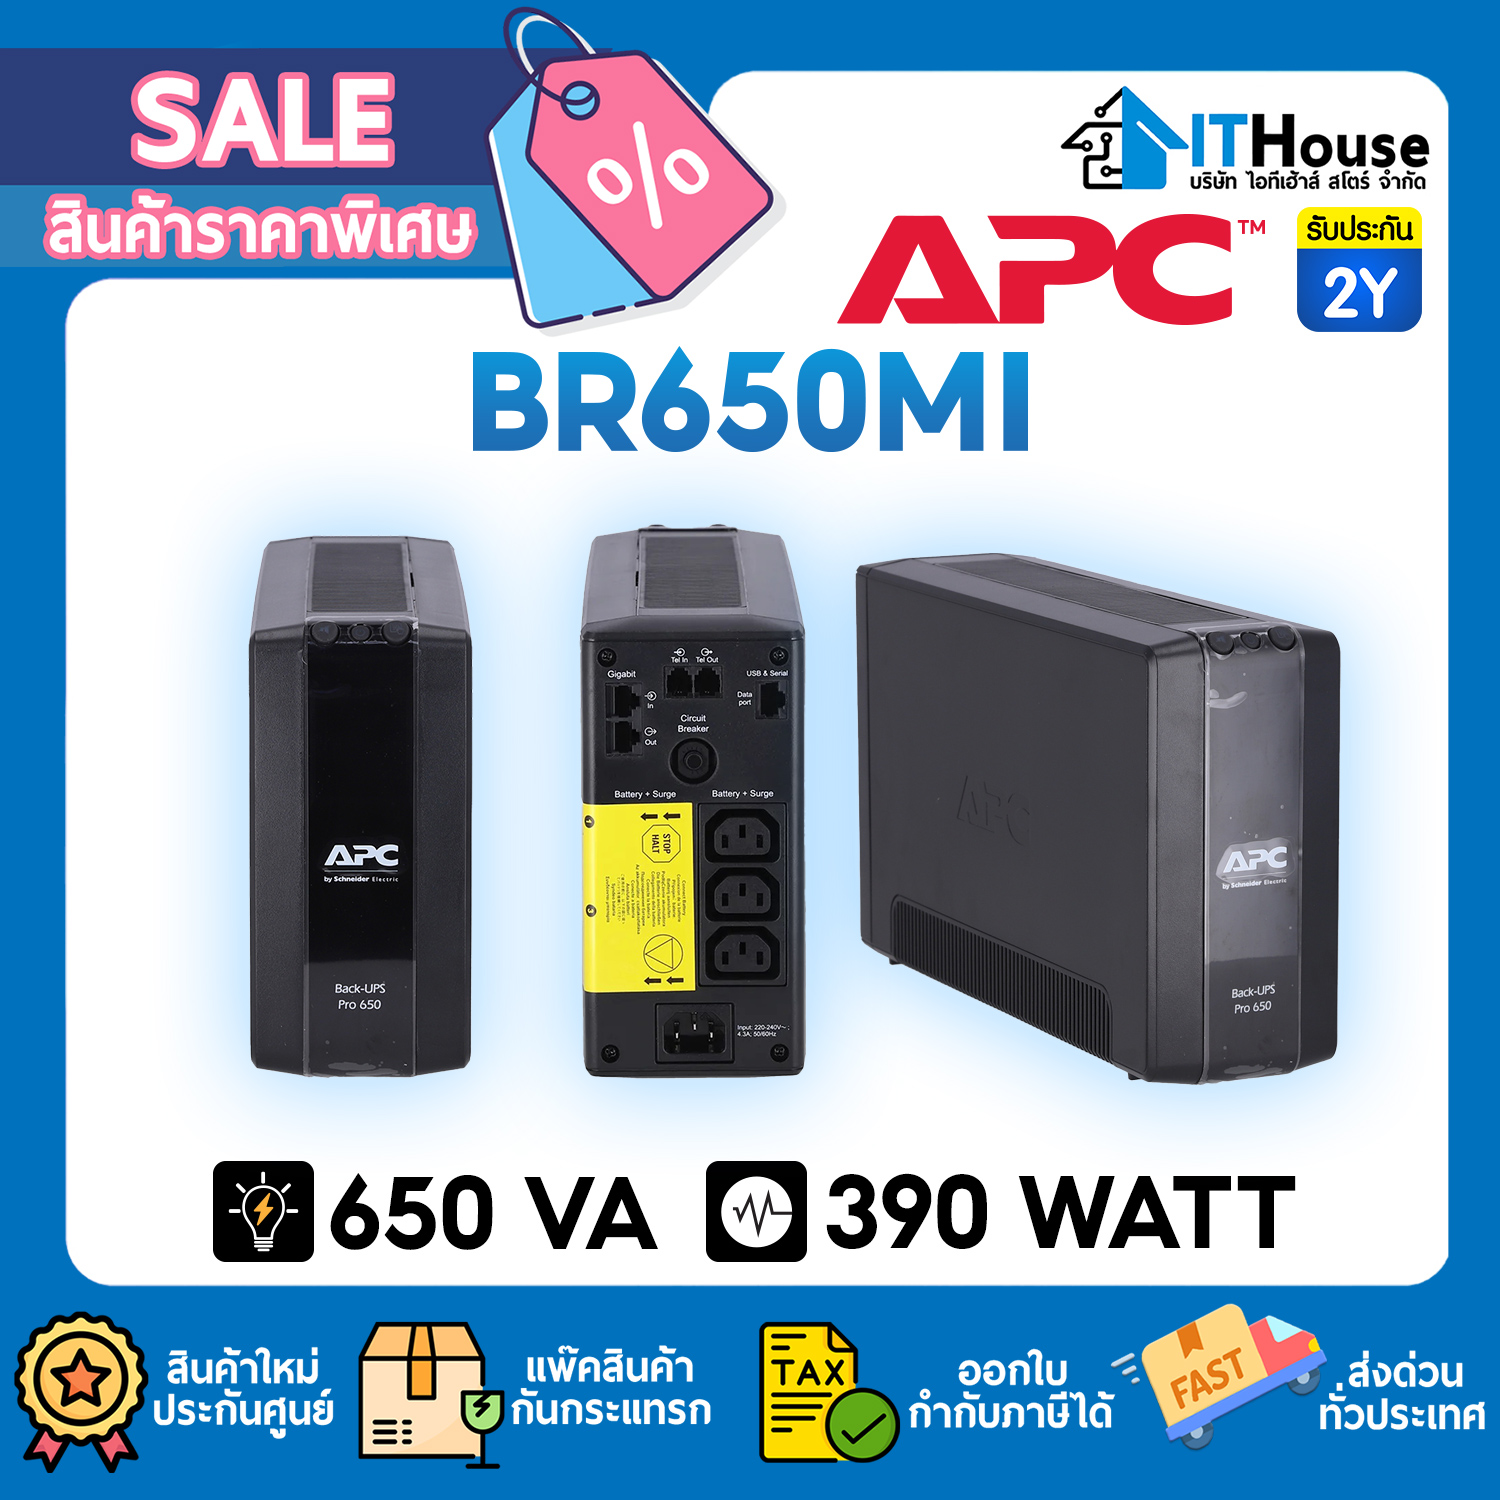 APC BR650MI (650 VA/390 WATT) UPS เครื่องสำรองไฟ 6 ช่อง มีจอ LCD แสดงสถานะ ระบบ Line Interactive